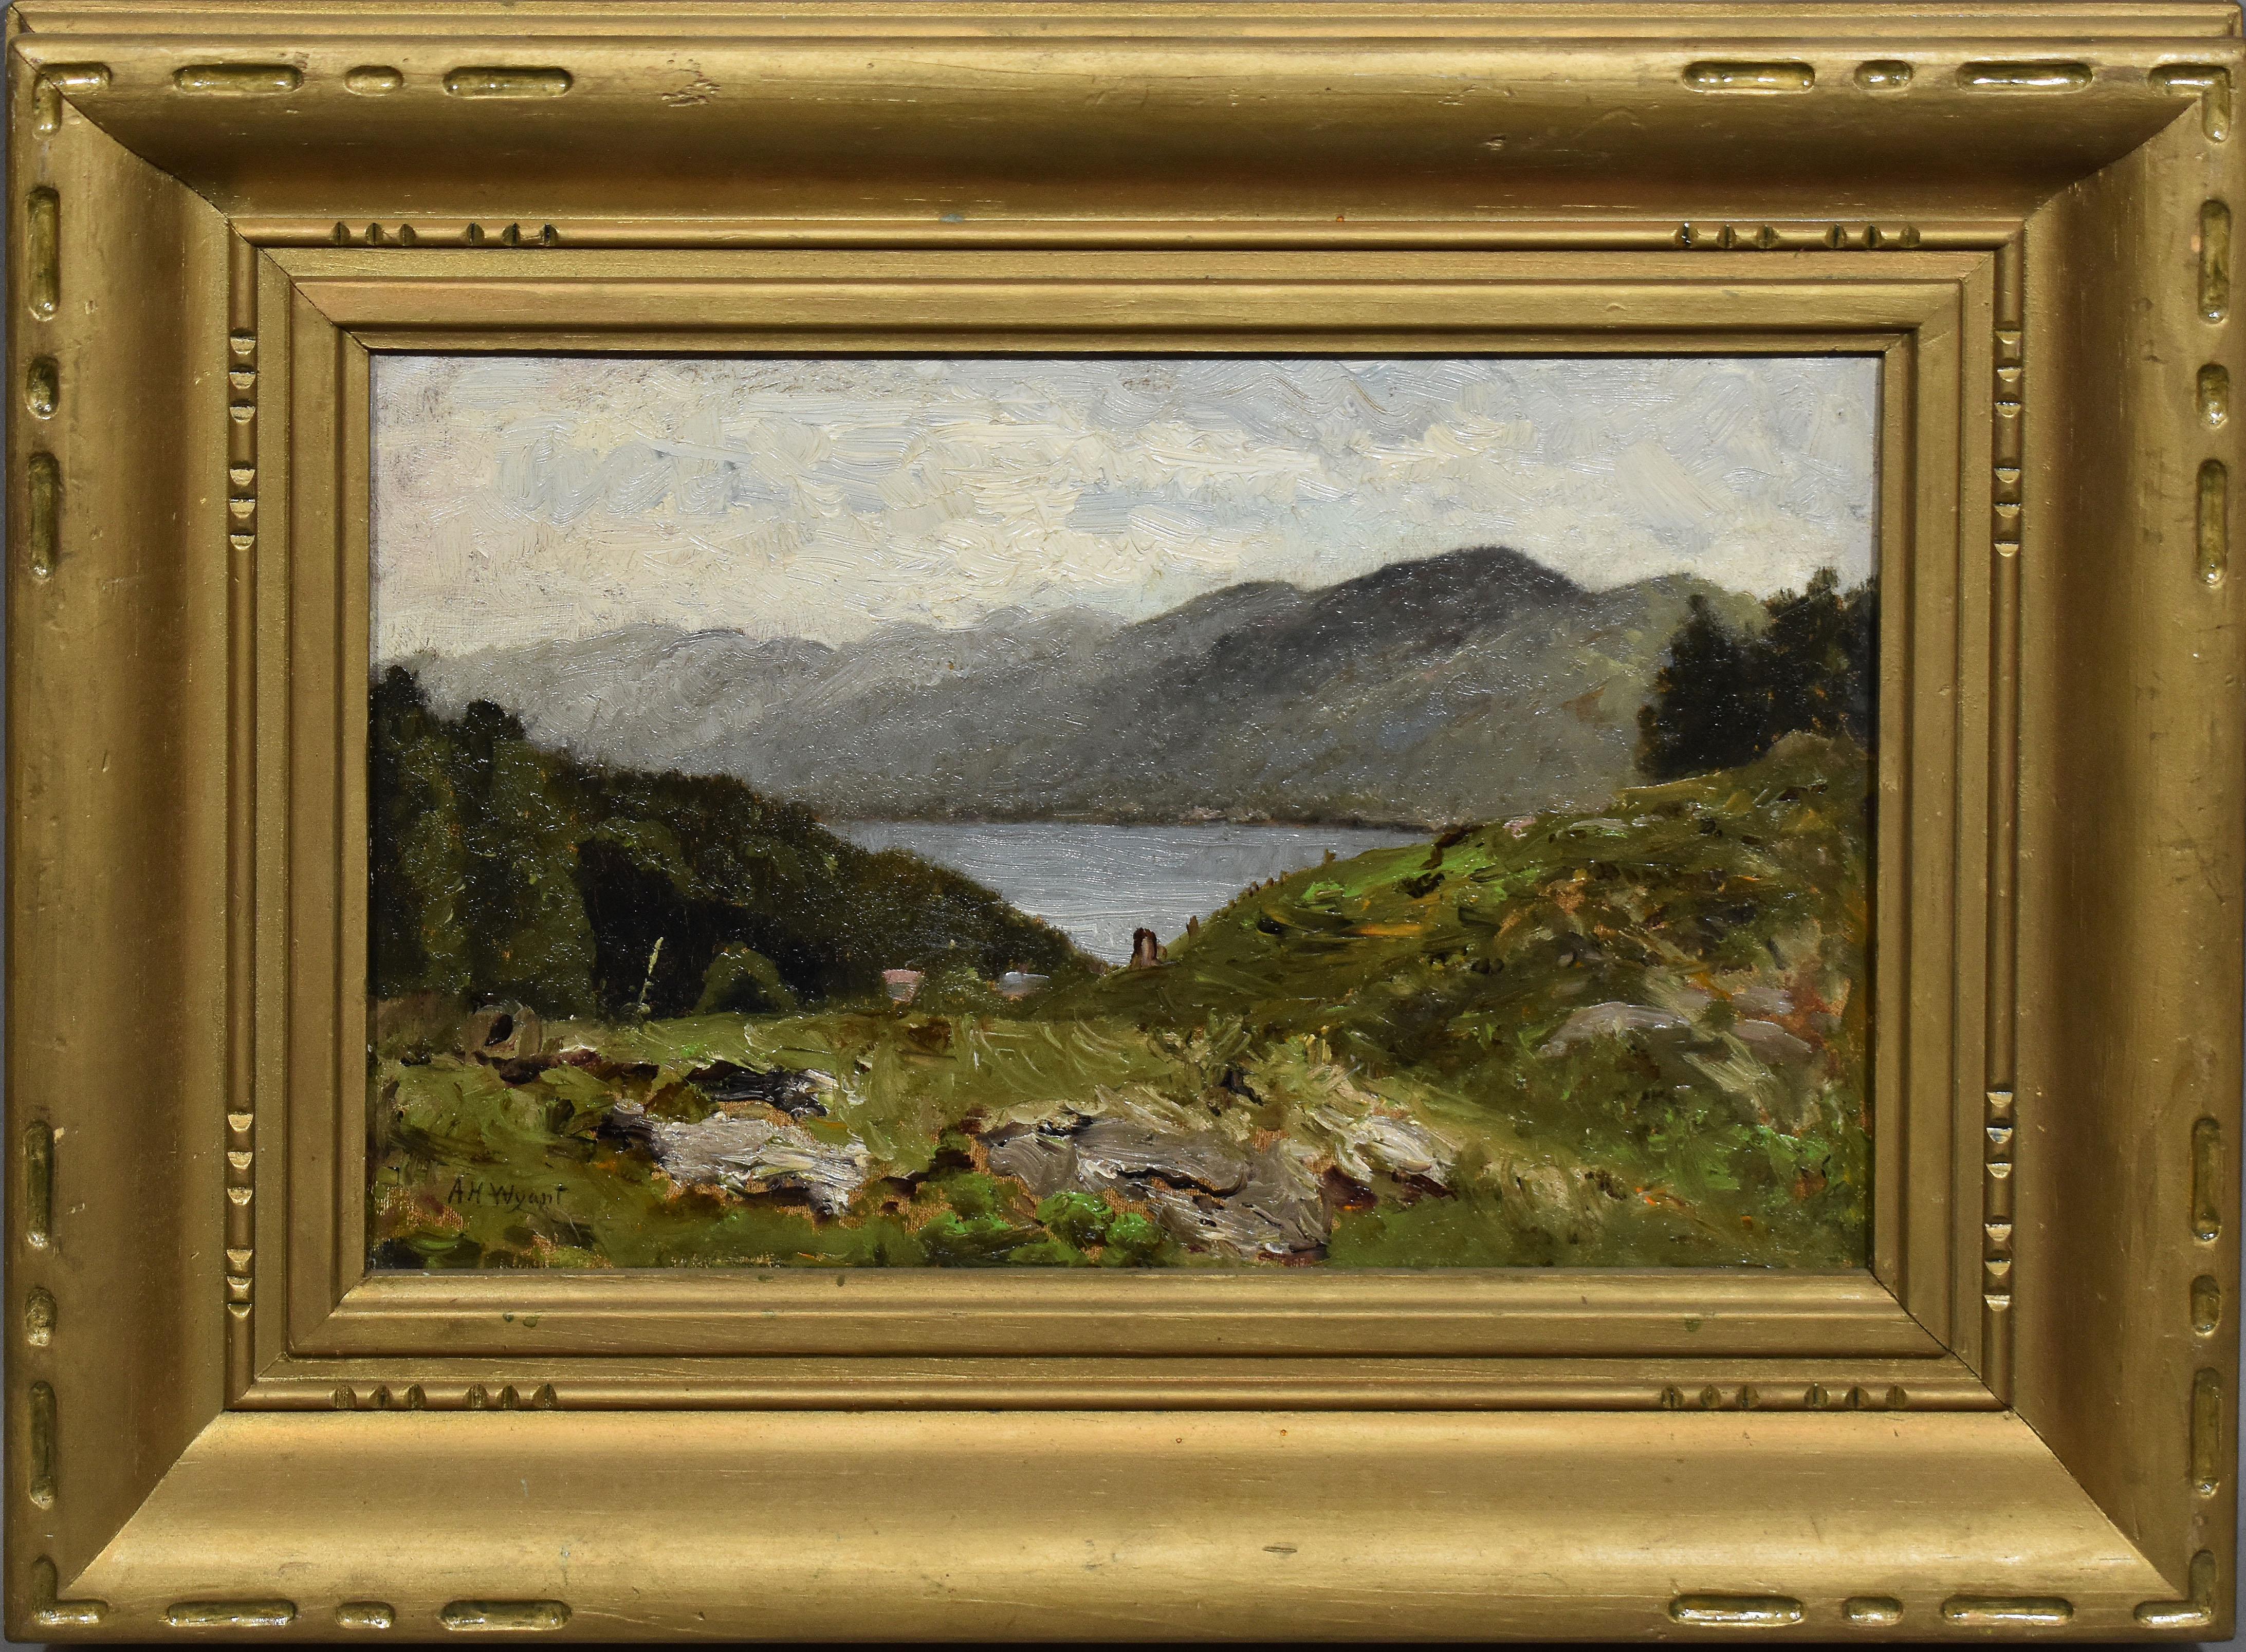 Alexander Helwig Wyant Landscape Painting - Antique American Hudson River School Oil Painting on Paper Landscape Sketch 